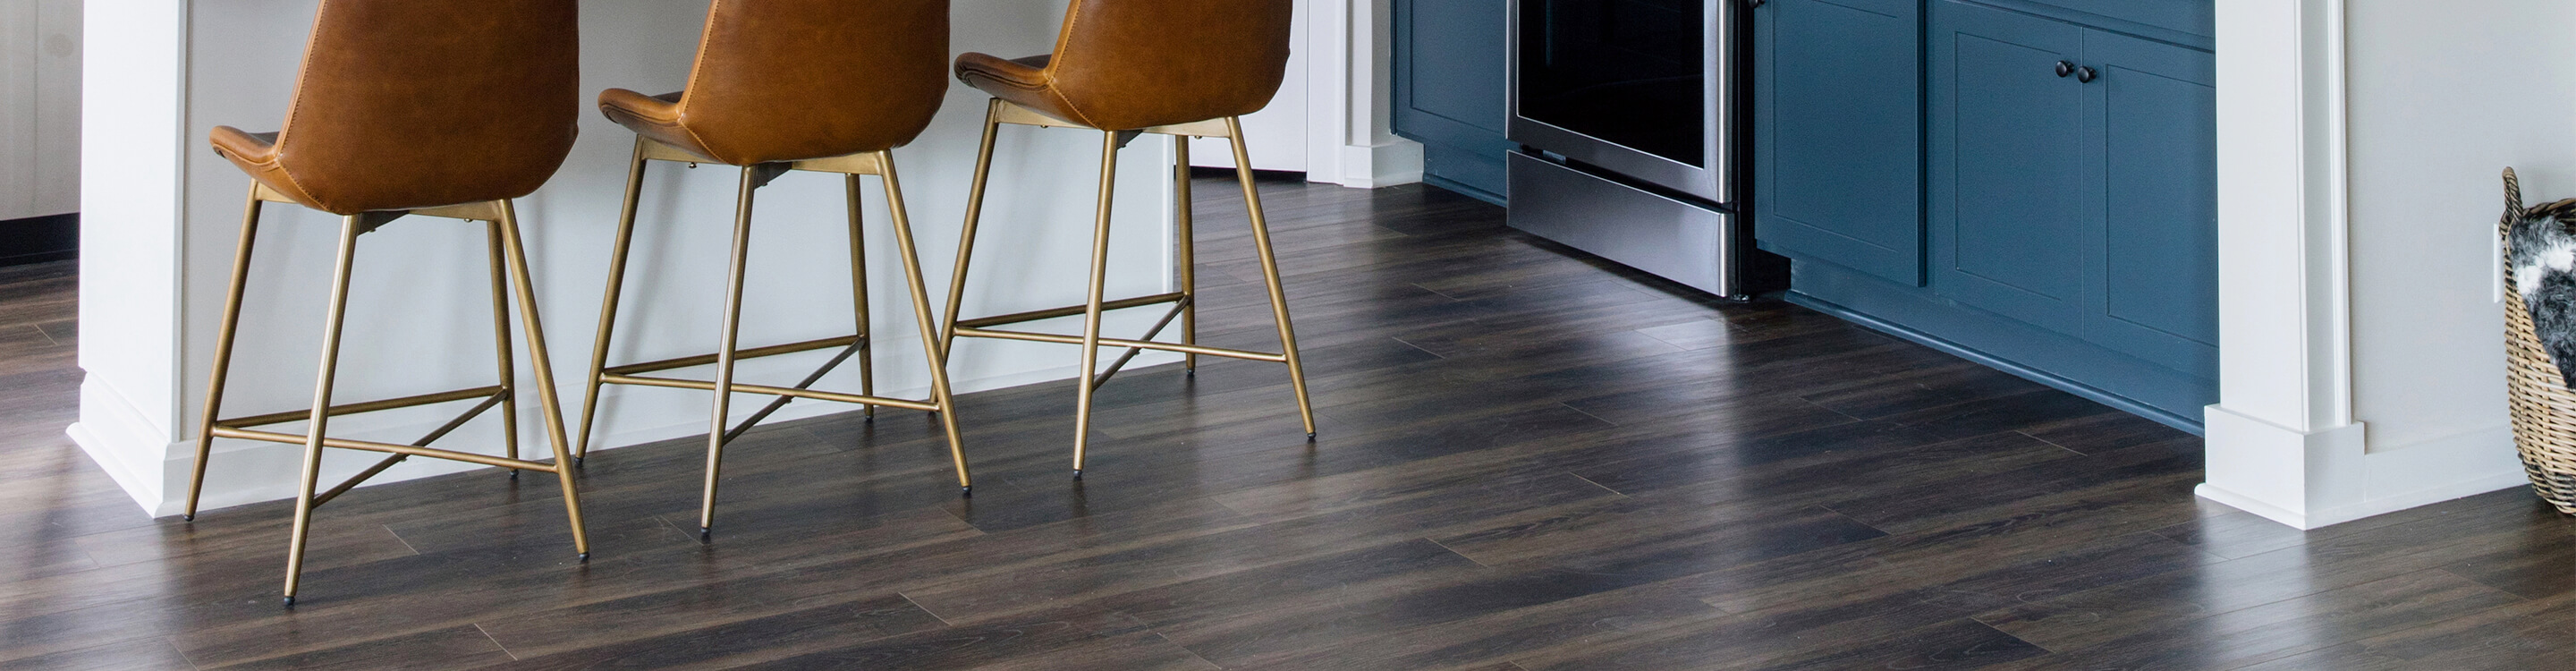 Laminate floors in a bright modern kitchen.